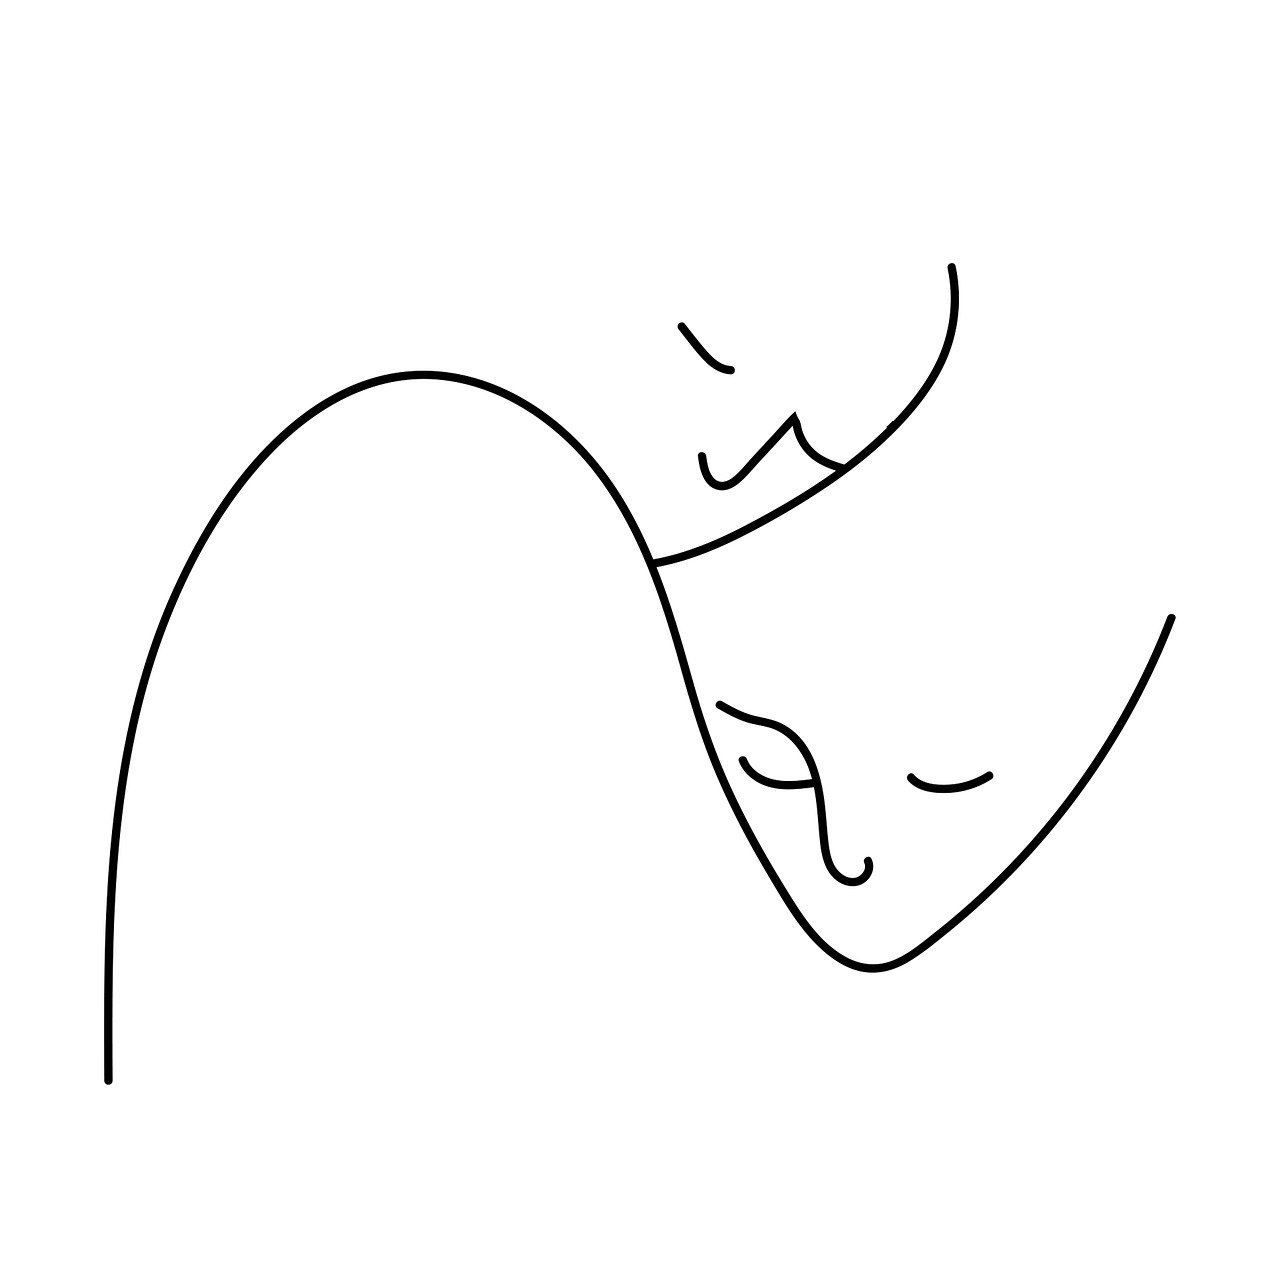 Dibujo emocional de pareja abrazada